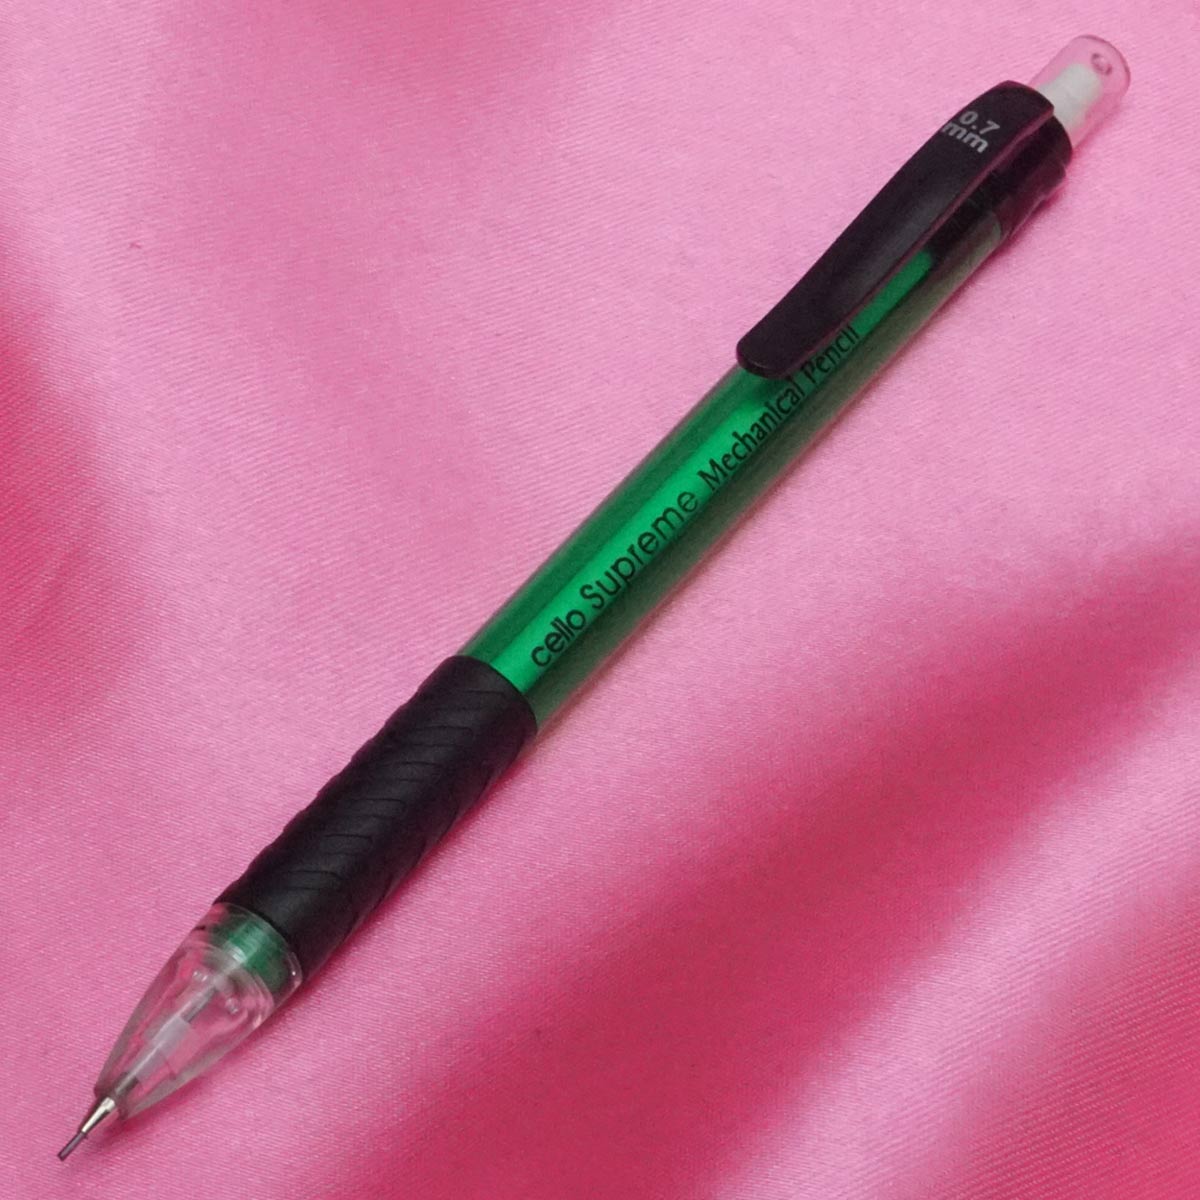 Cello Supreme 0.7mm Transparent Green Color Body With Eraser Led Pencil SKU 21422